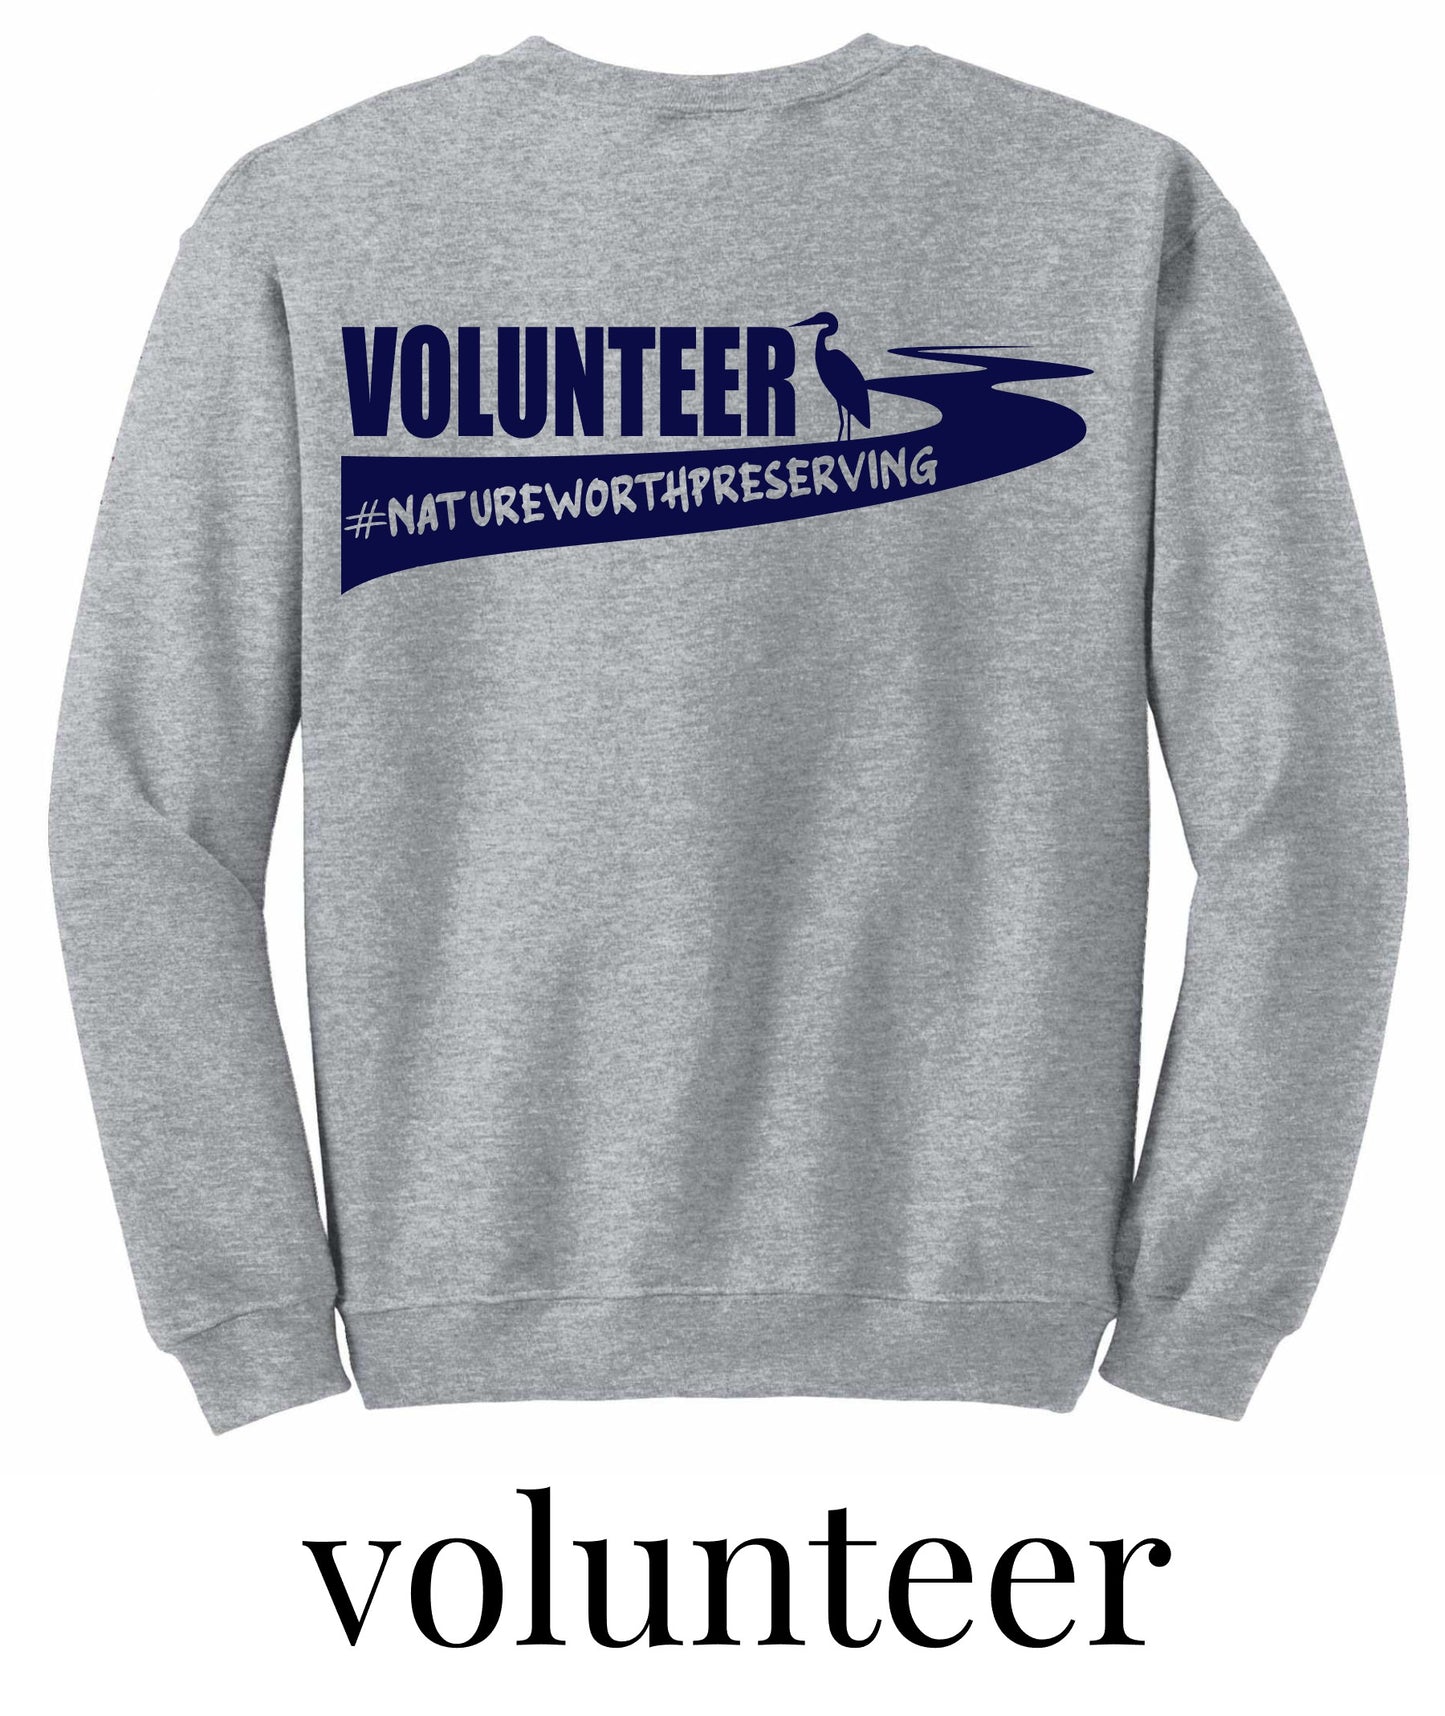 Blue Heron Crewneck Sweatshirt w/ Front Chest Logo (gray)